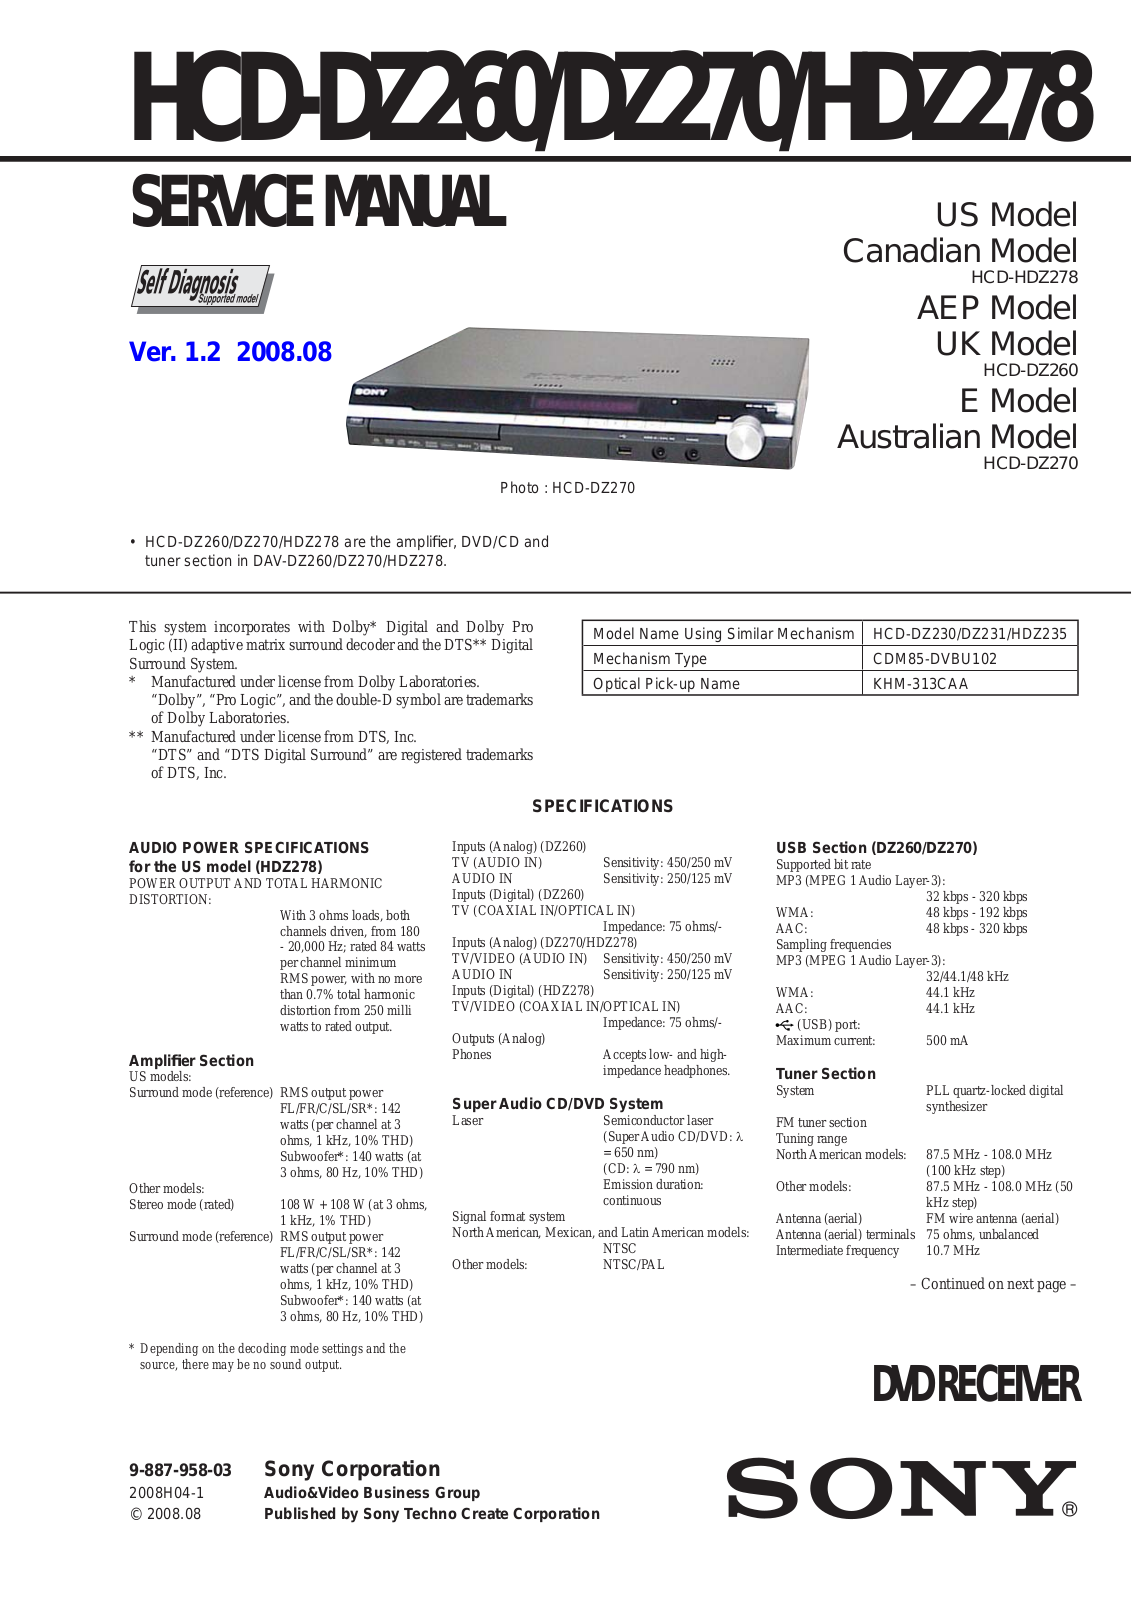 Sony HCDDZ-260, HCDDZ-270, HCDDZ-278 Service manual